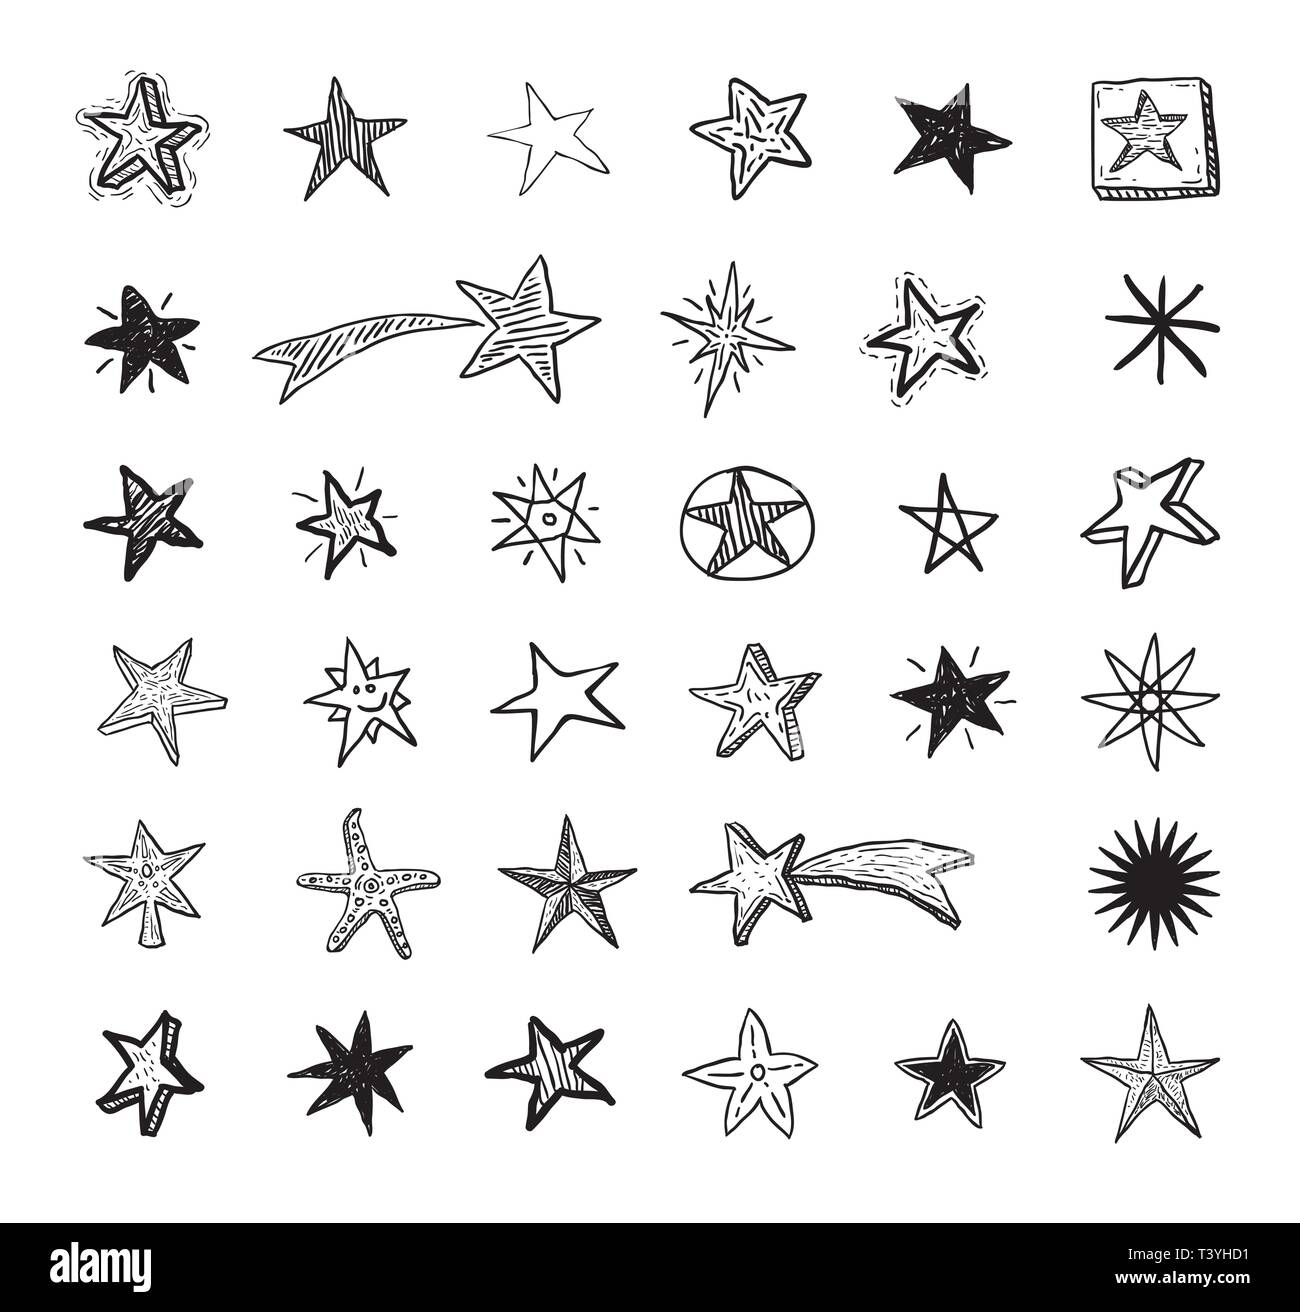 Star Doodles, hand drawn vector illustration Stock Vector Image & Art ...